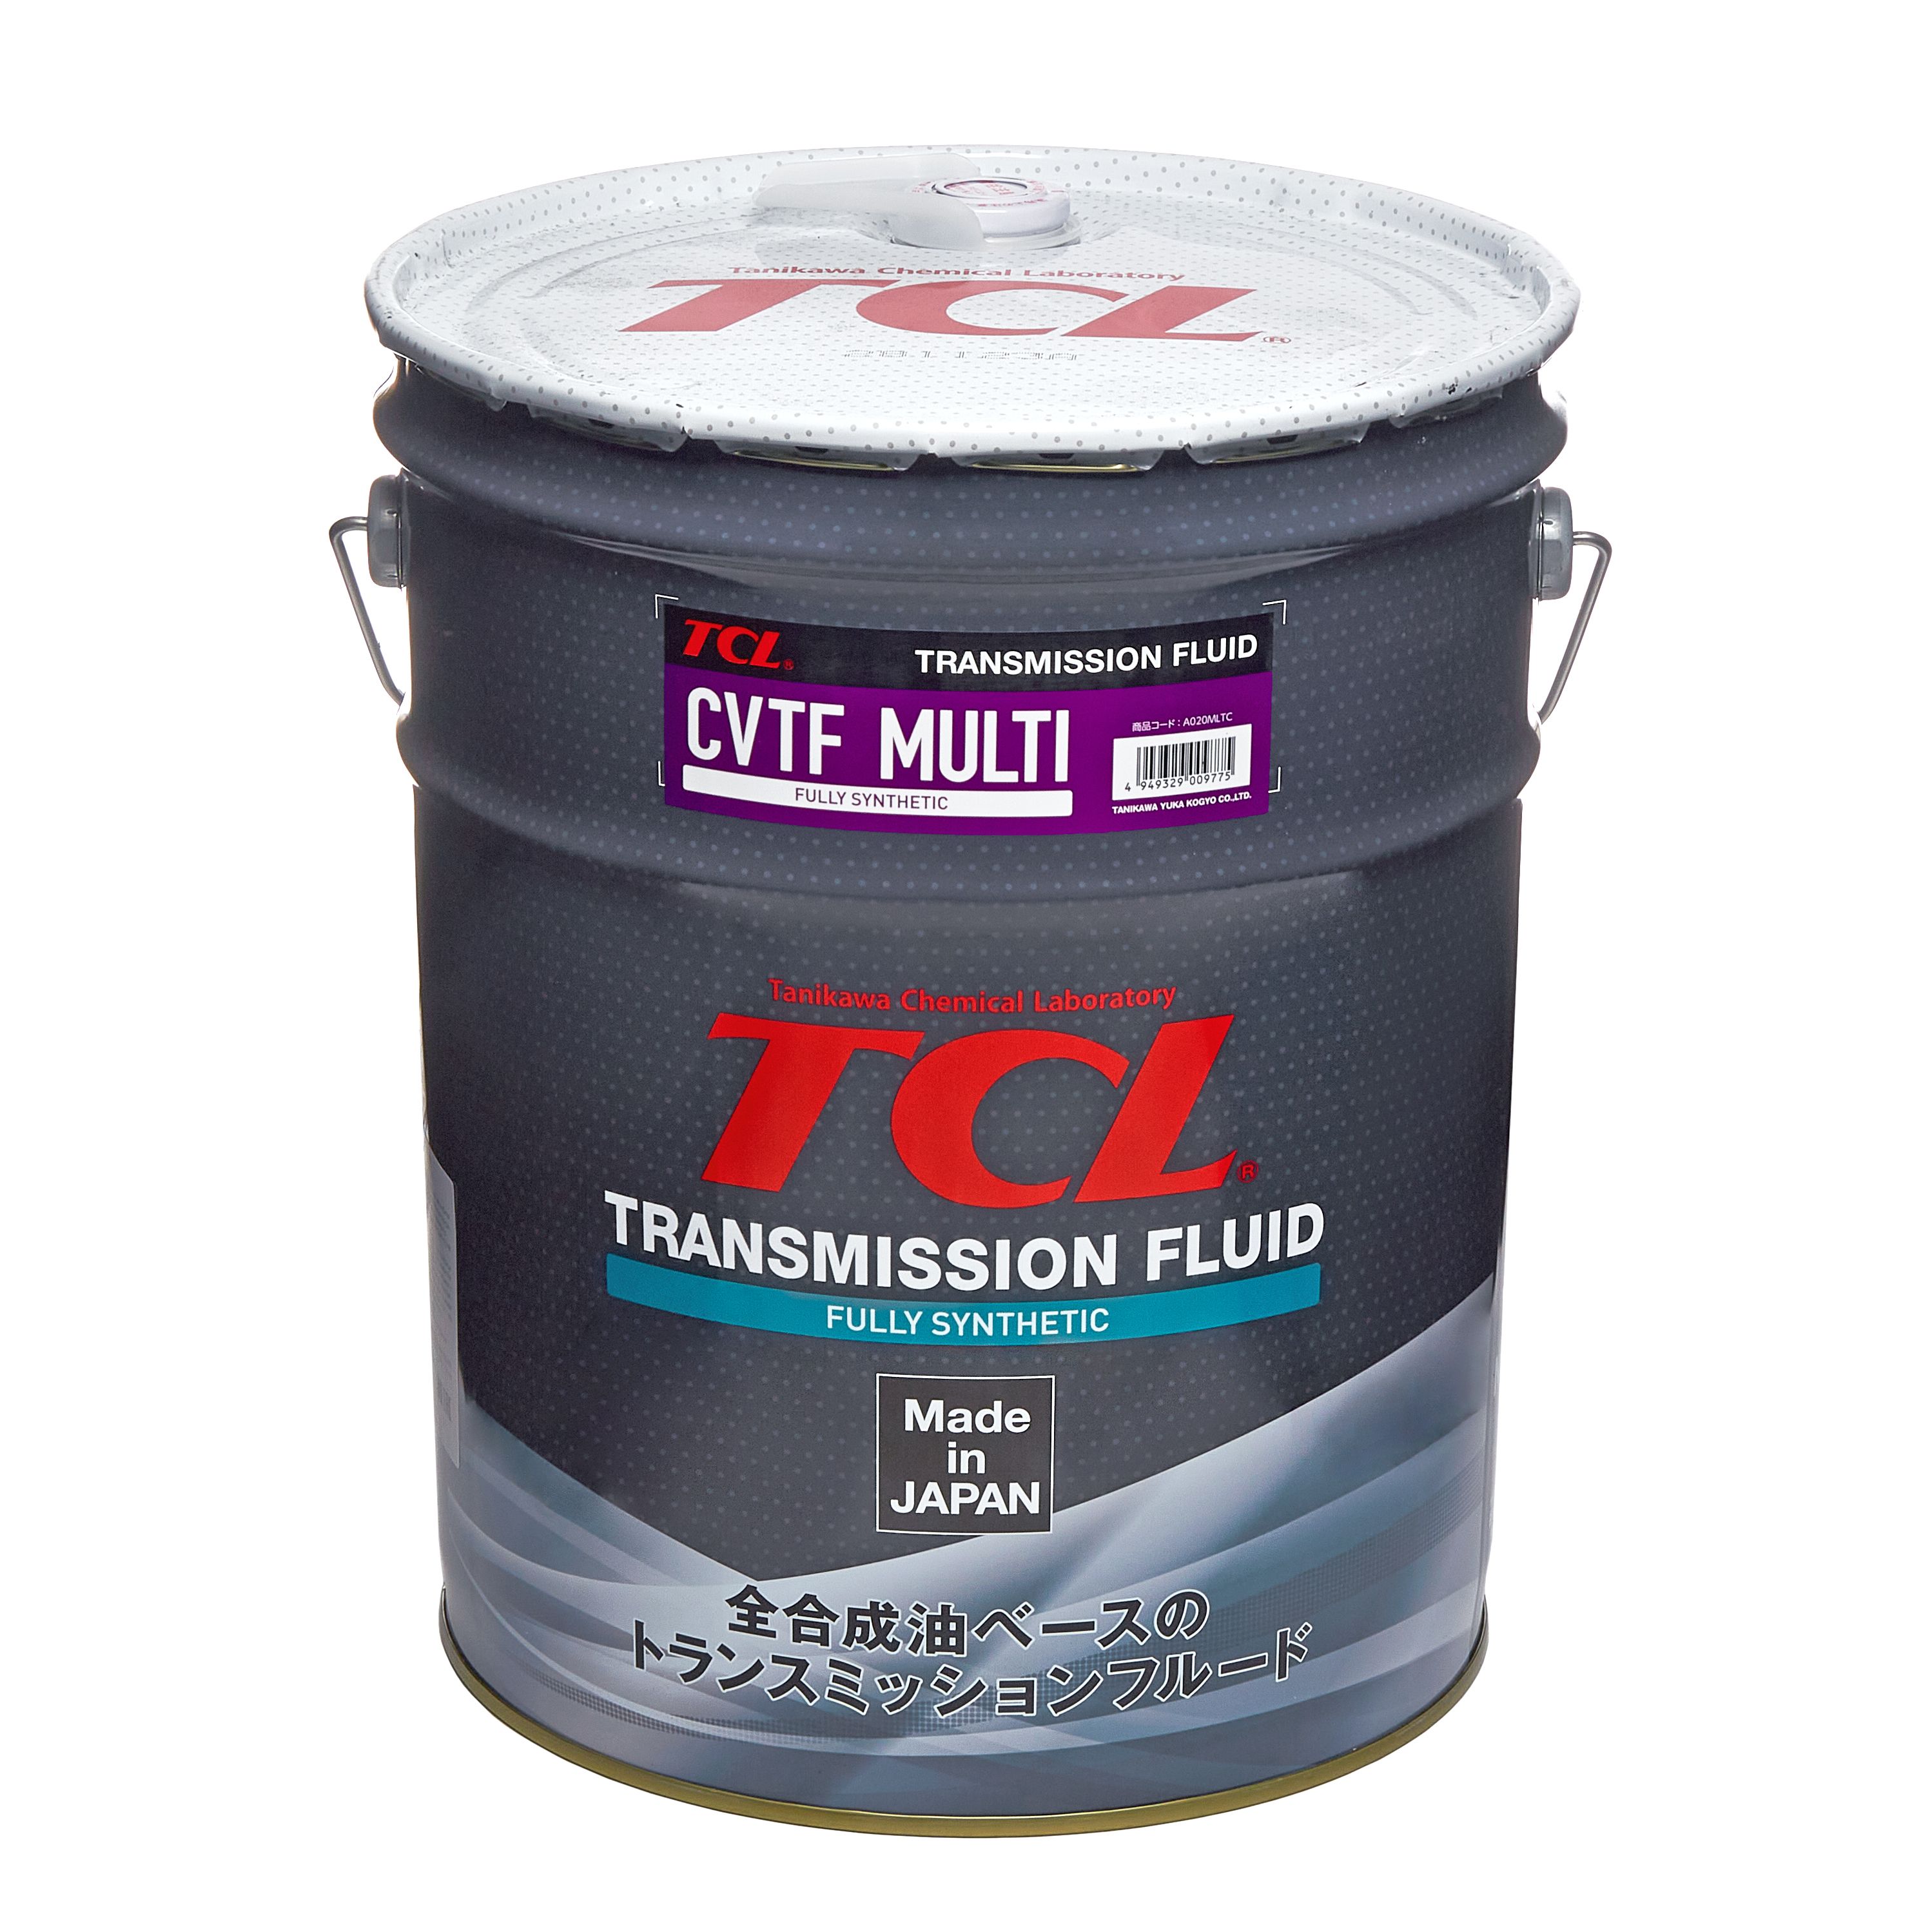 Жидкость для вариатора TCL CVTF Multi, 1825134, 20л